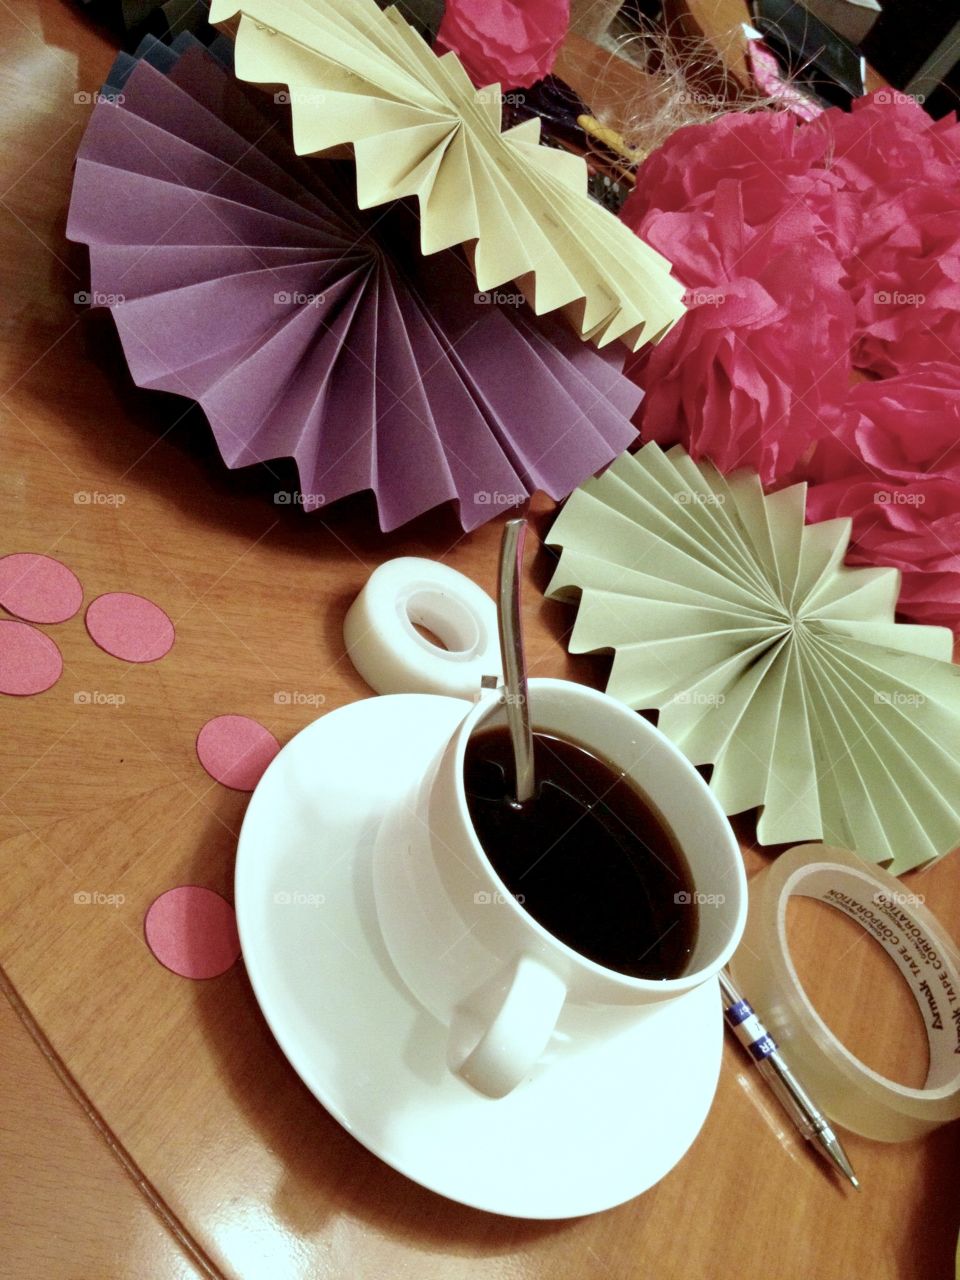 Coffee ☕️ and arts 🎭 